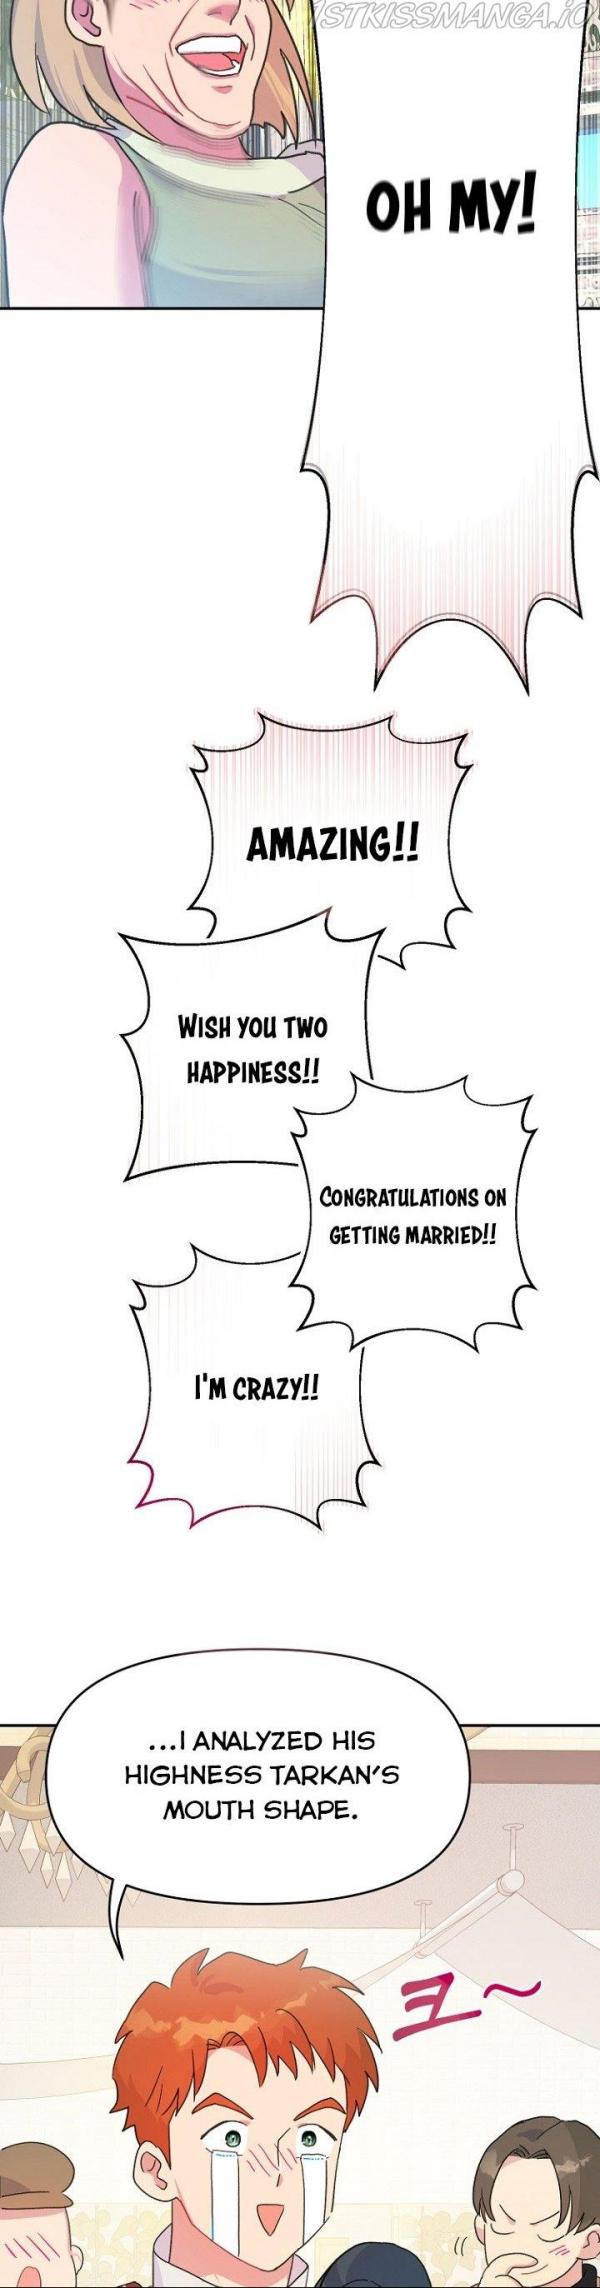 One-room Hero Ch.71 Page 1 - Mangago